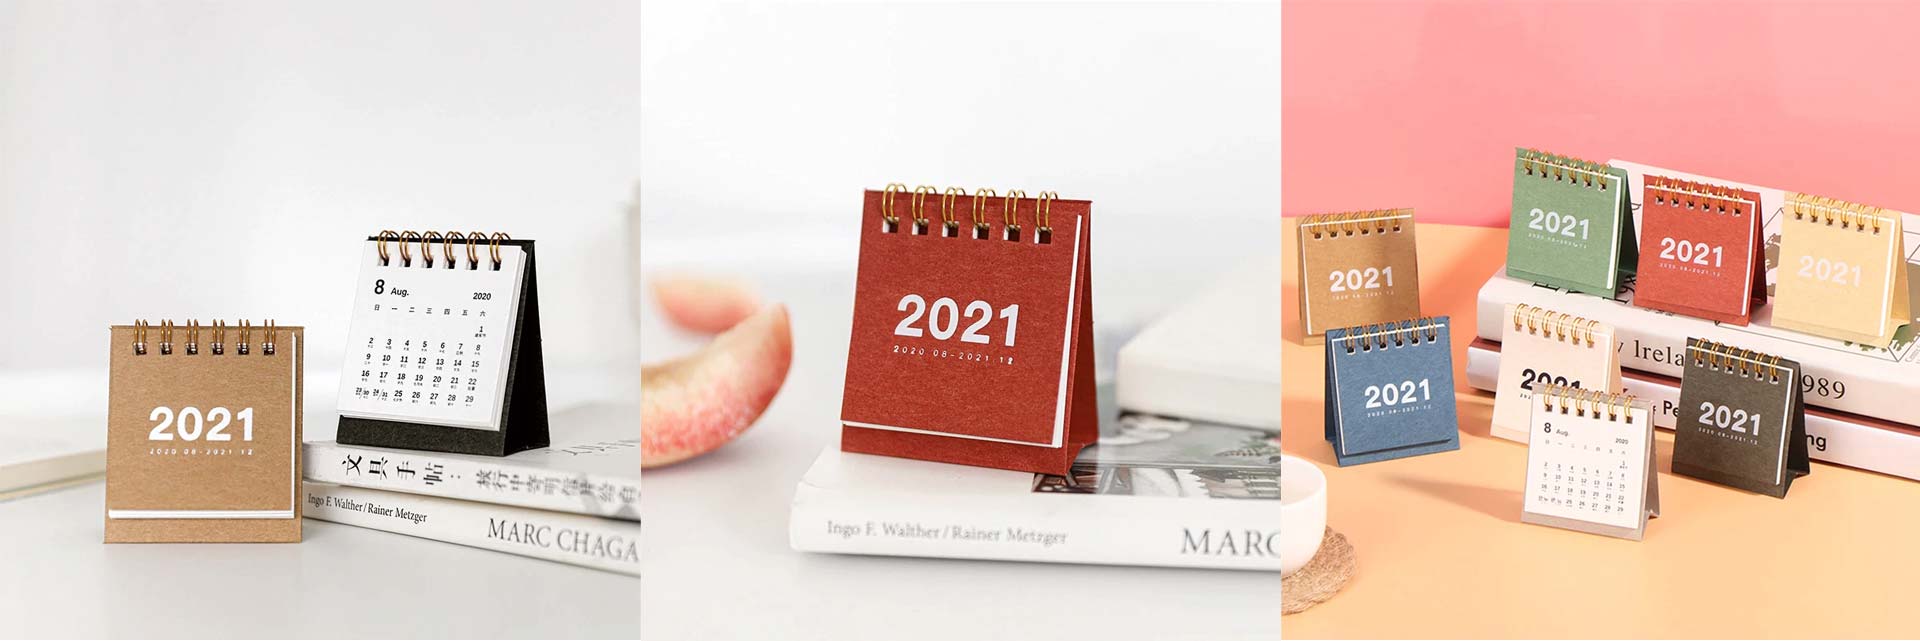 перекидные календари на 2021 год